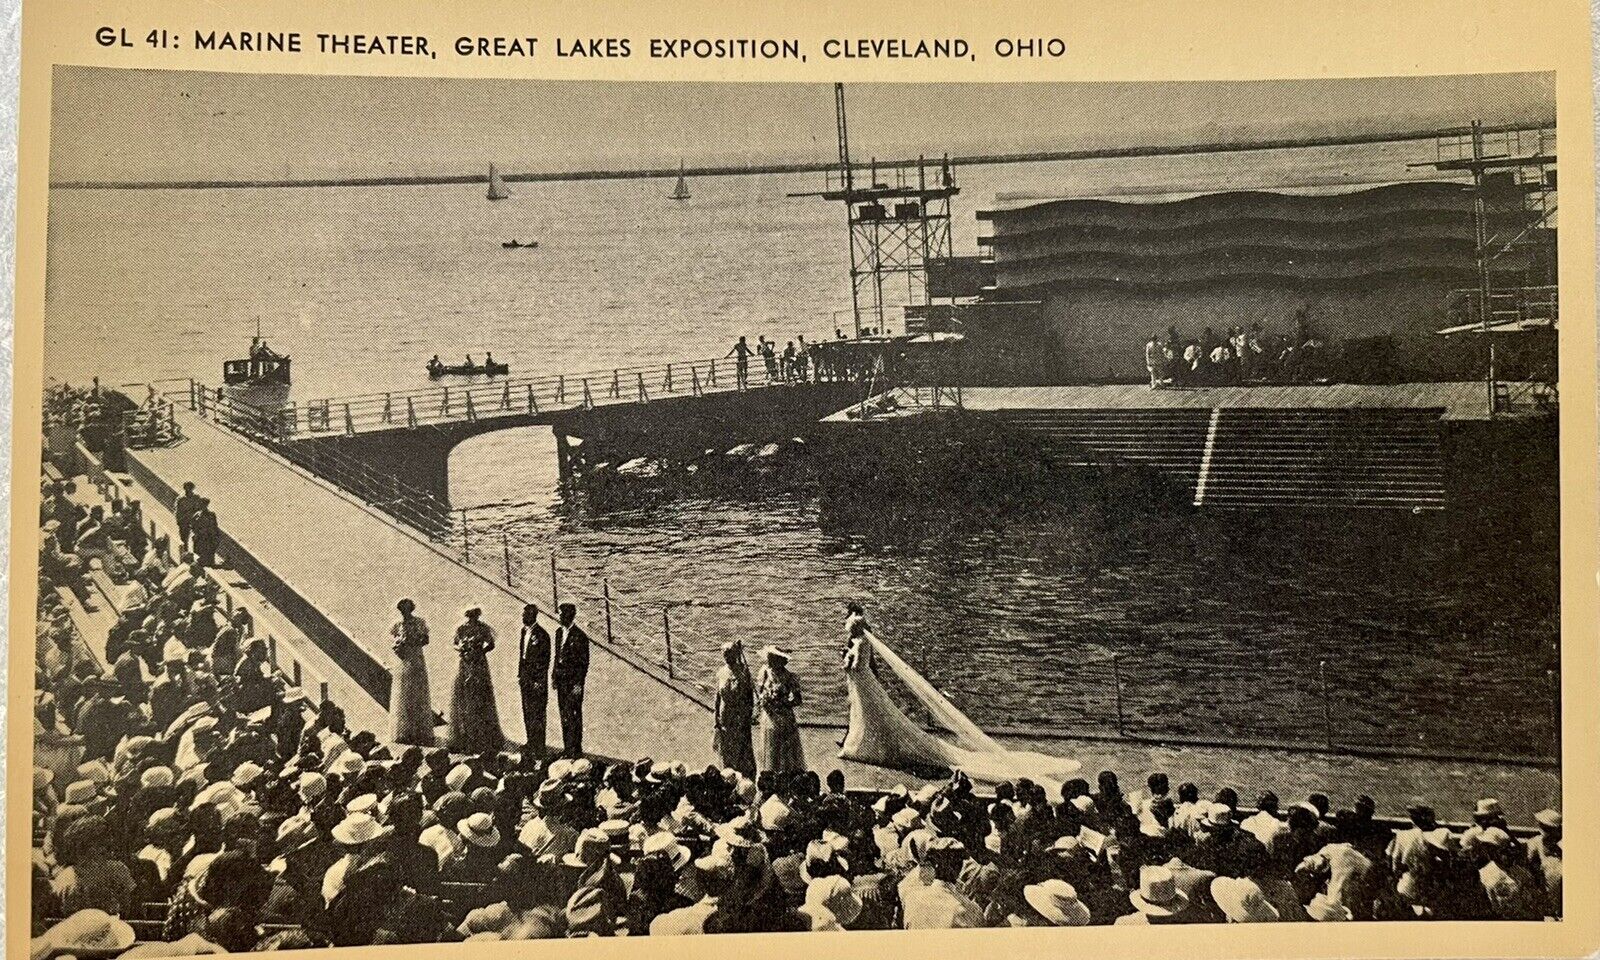 Great Lakes Exposition Cleveland Ohio 1936-37 Marine Theater Wedding Ceremony